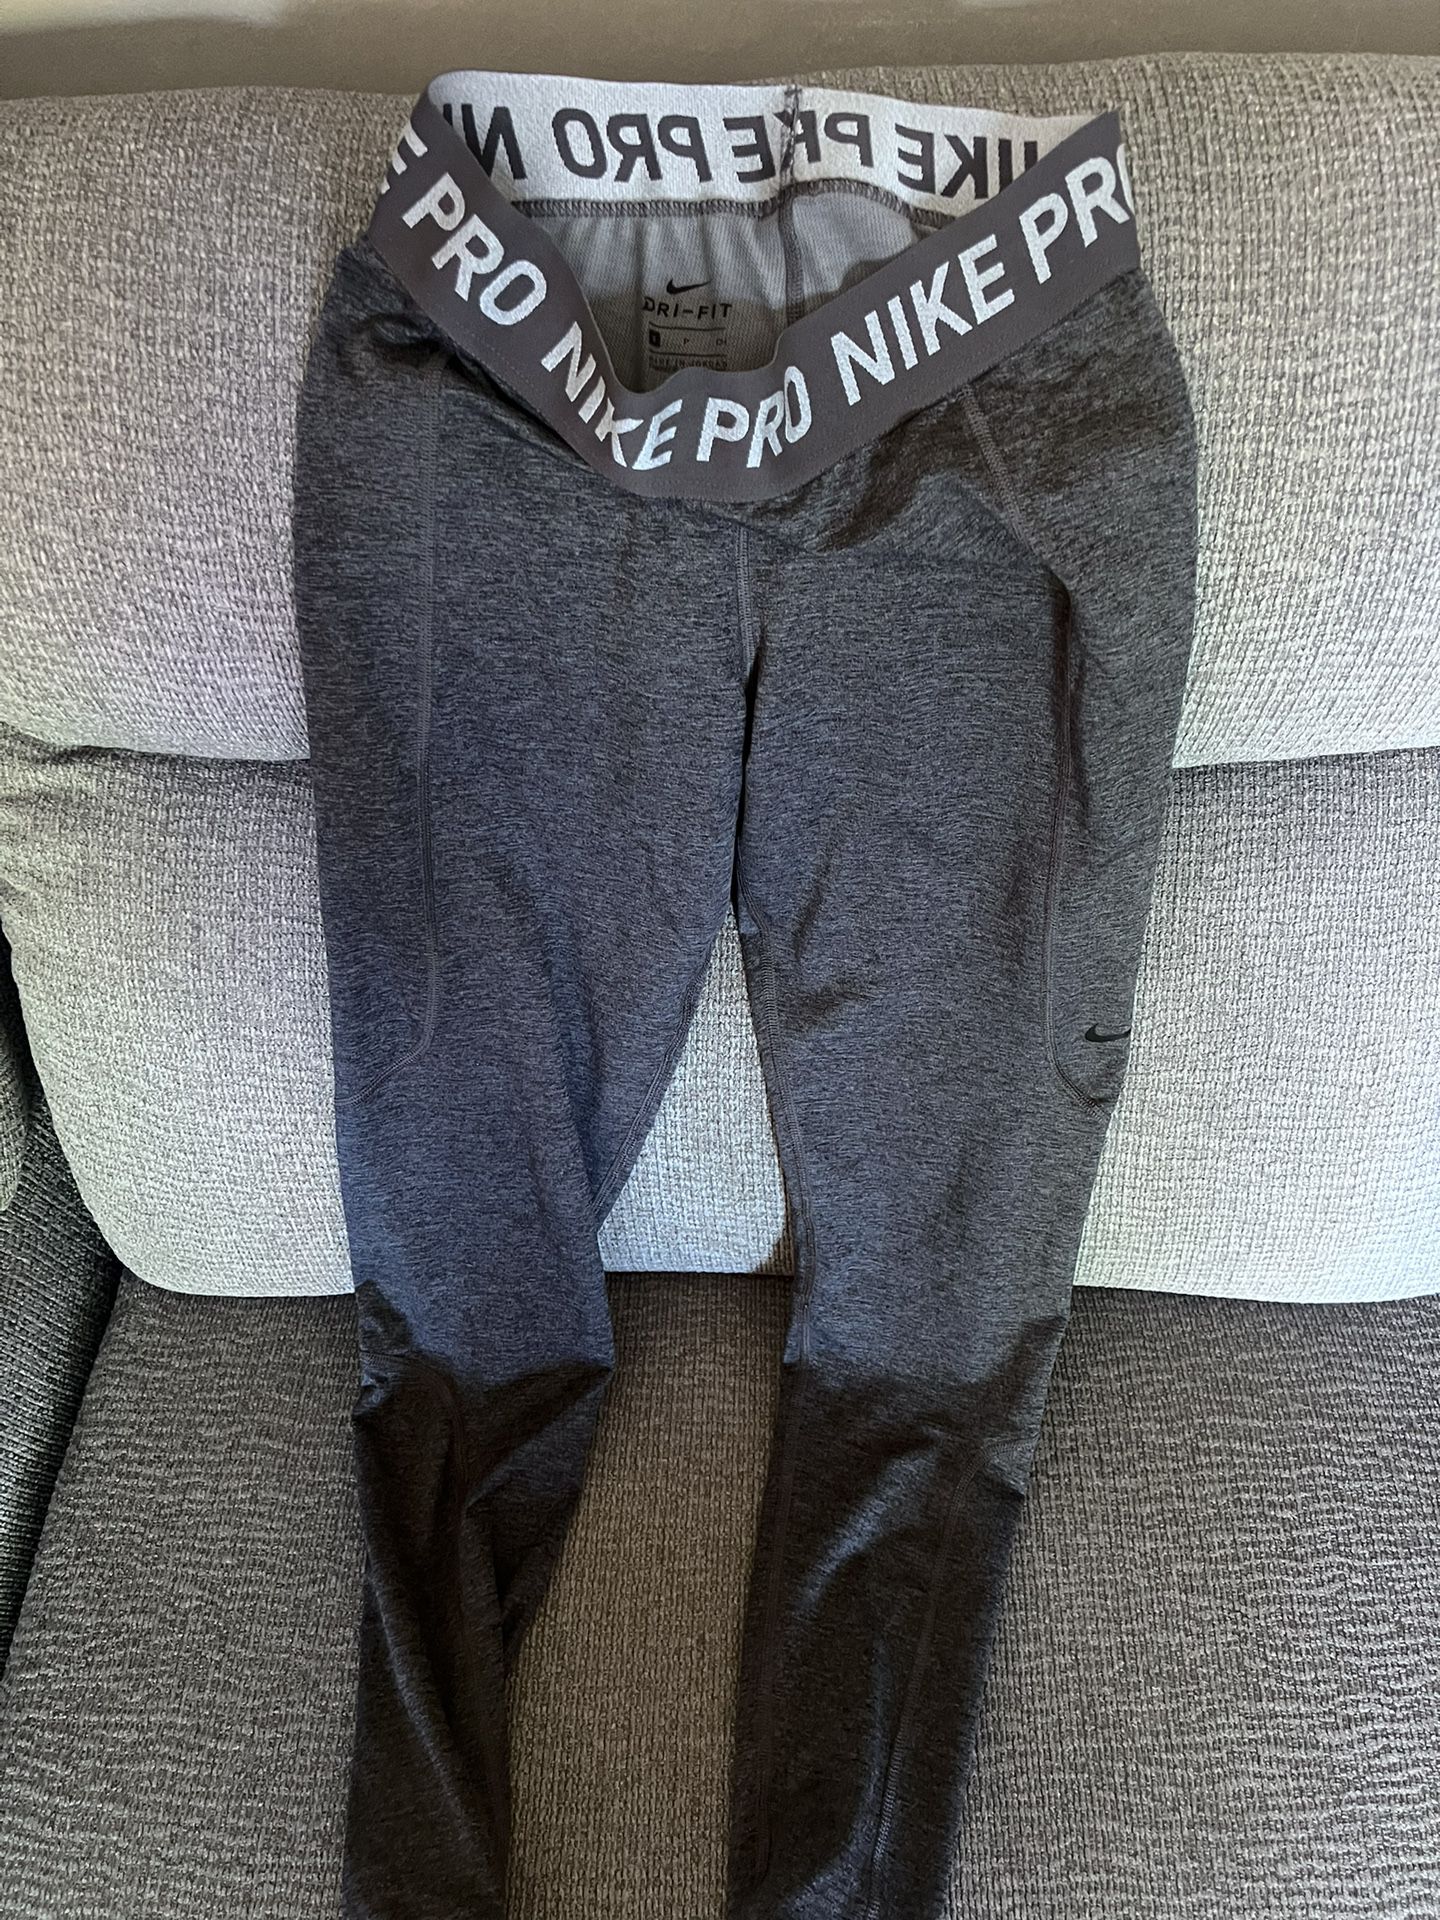 Nike Pro Pants 